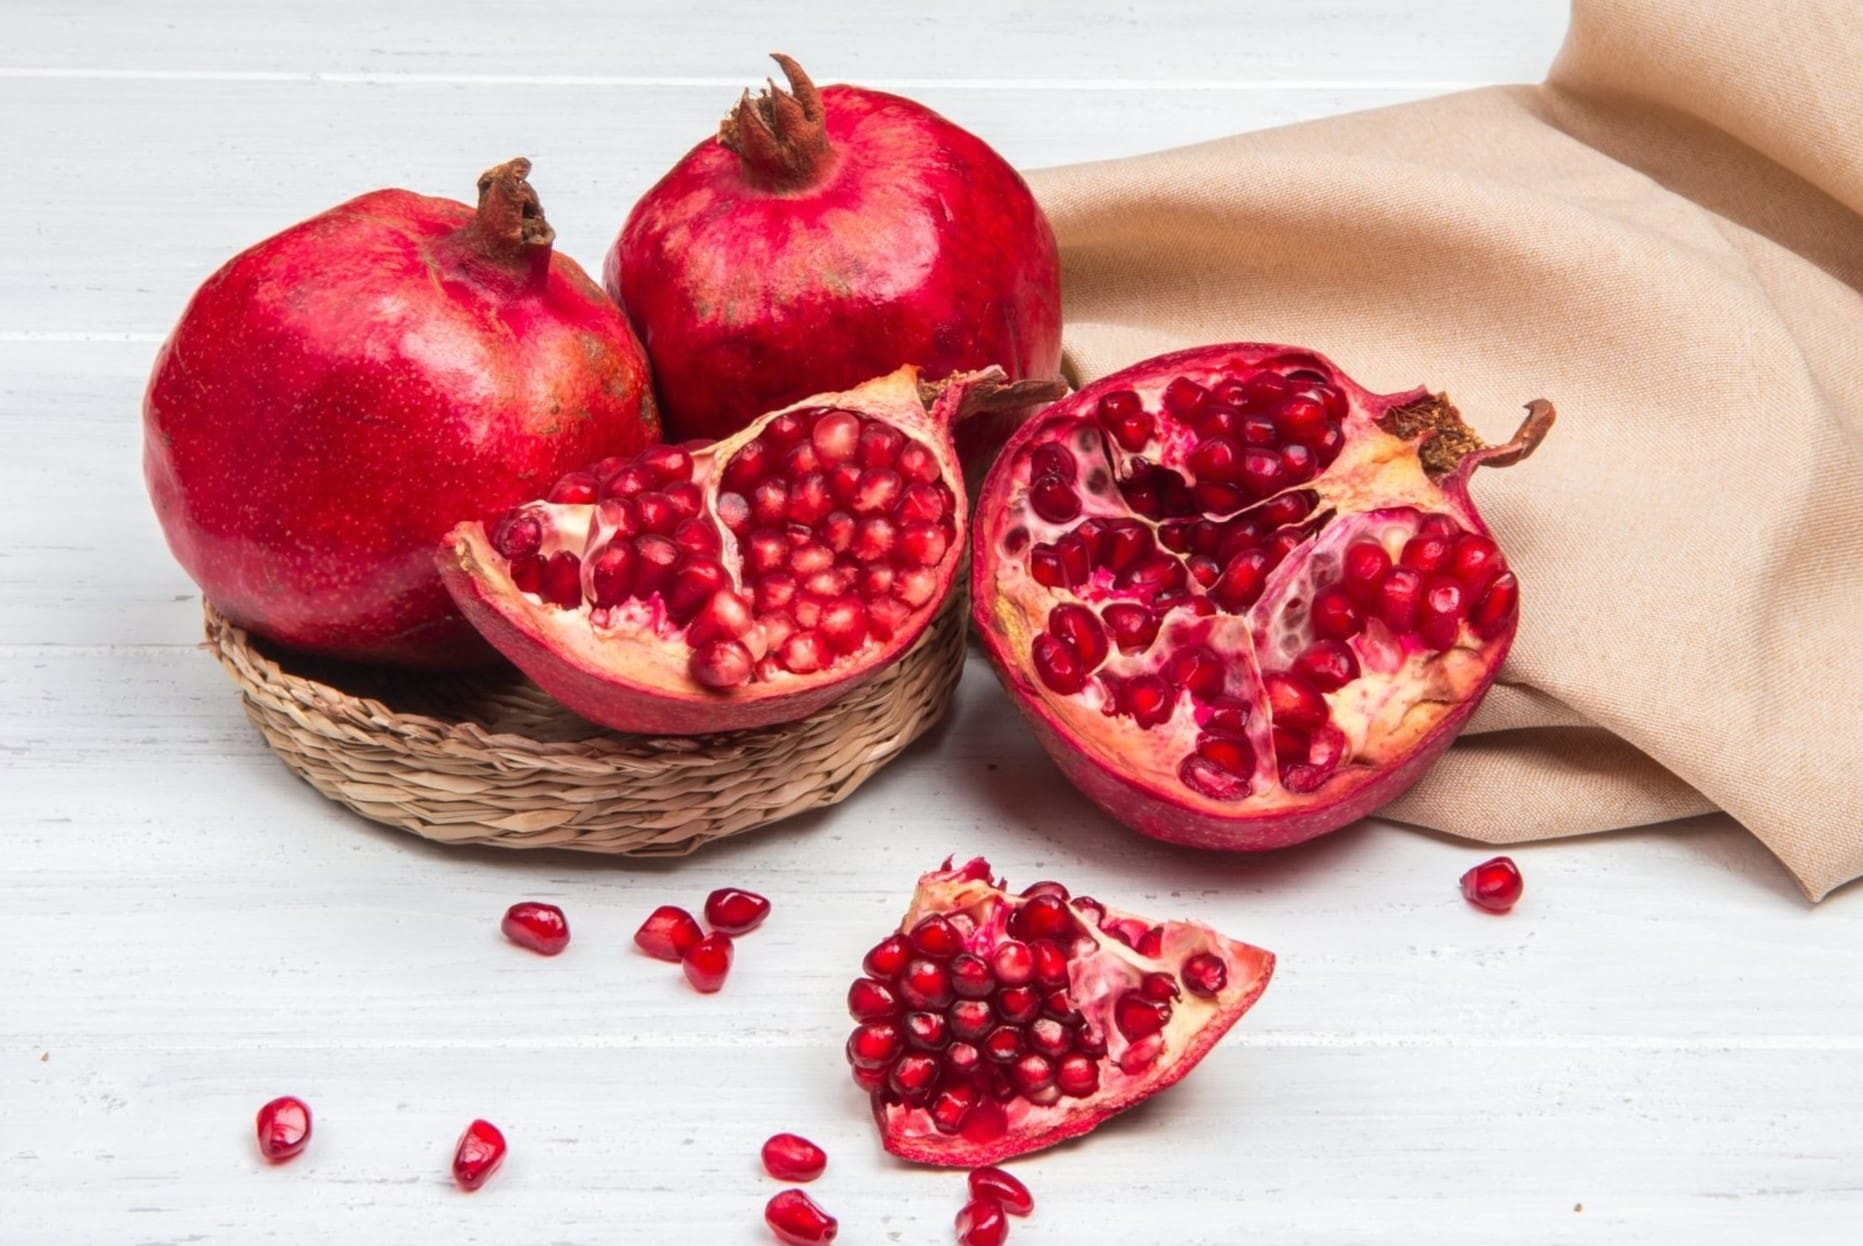 How Do I Eat Pomegranate Seeds